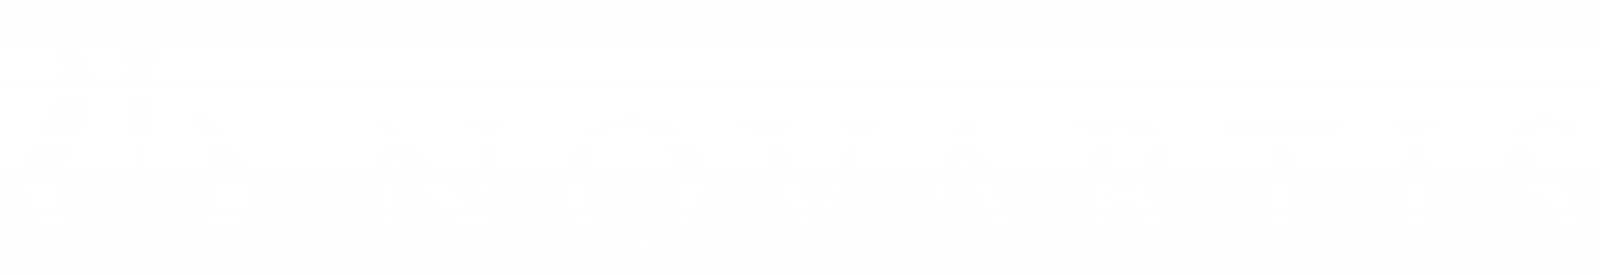 Novartis Logo white with clear background